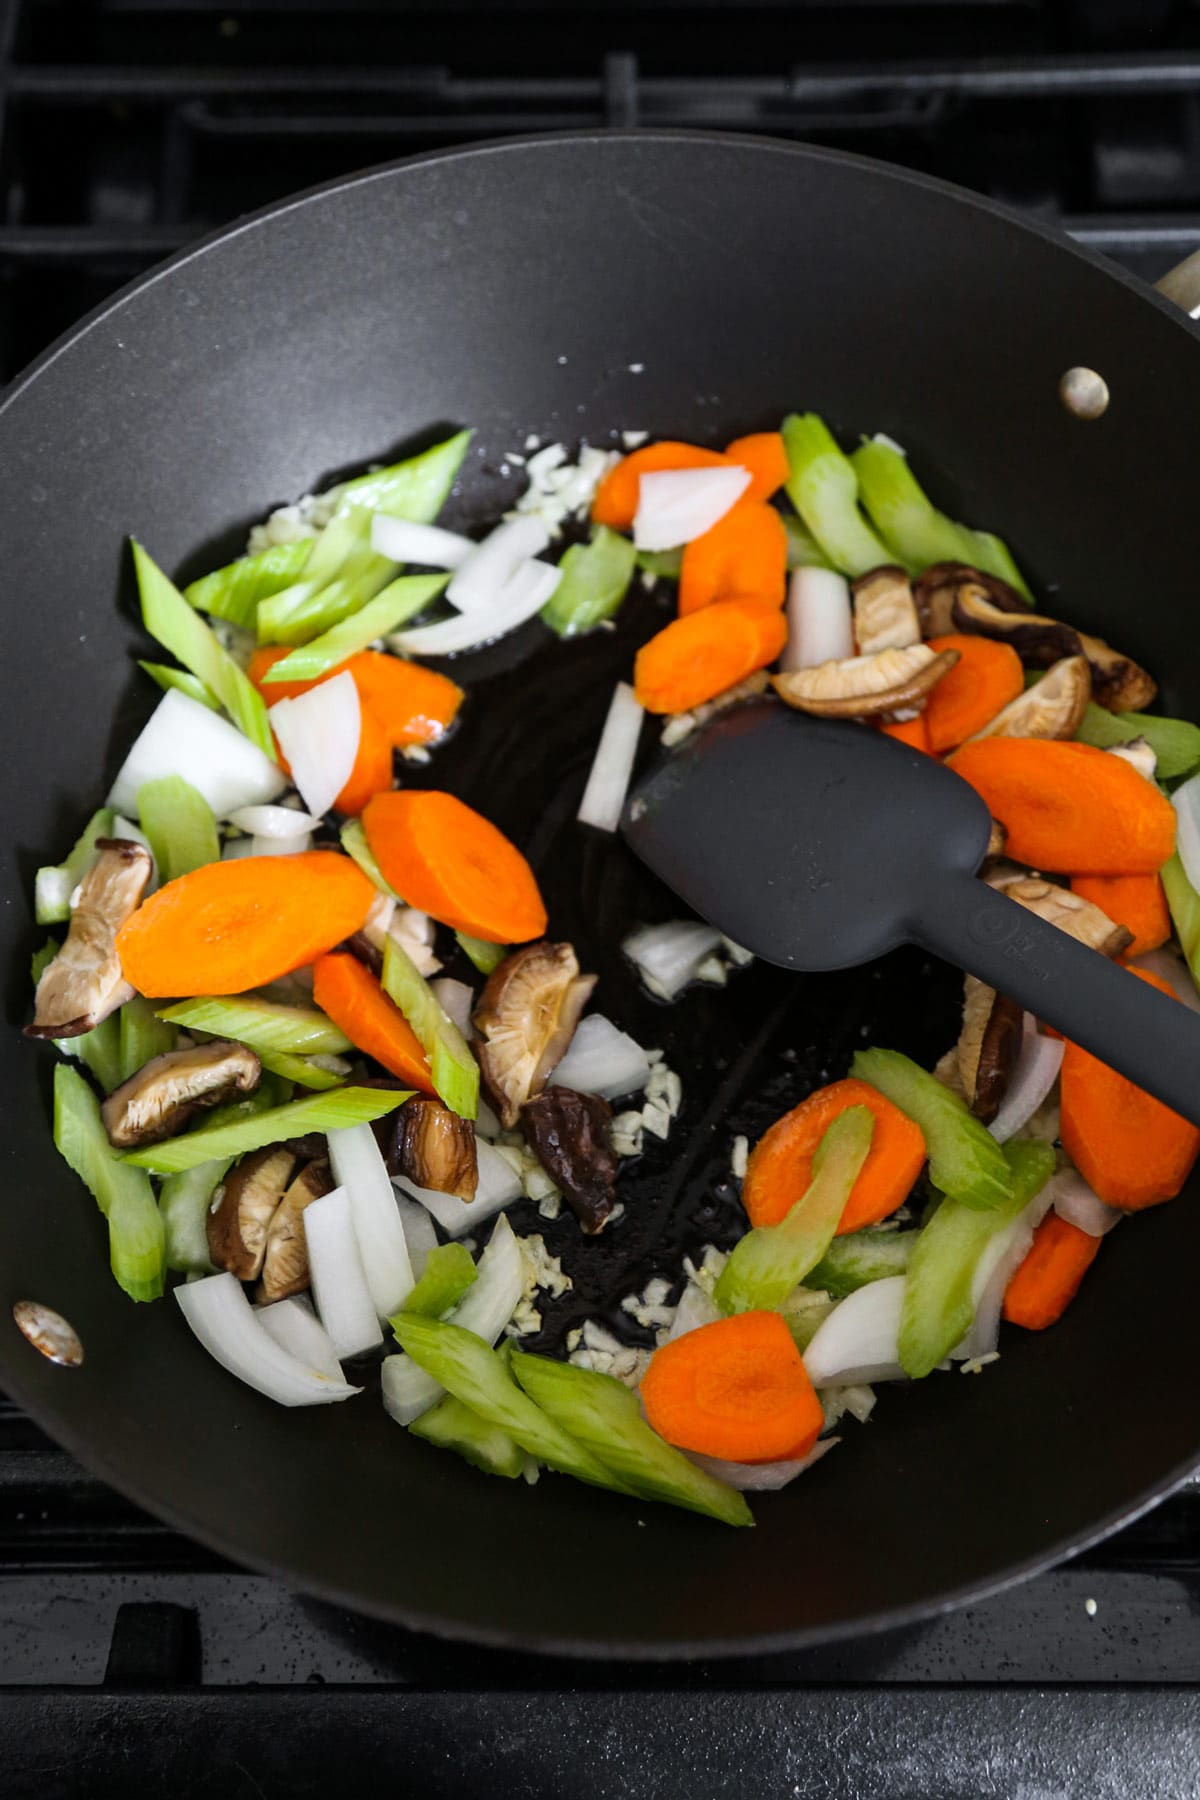 how to make stir fry veggies